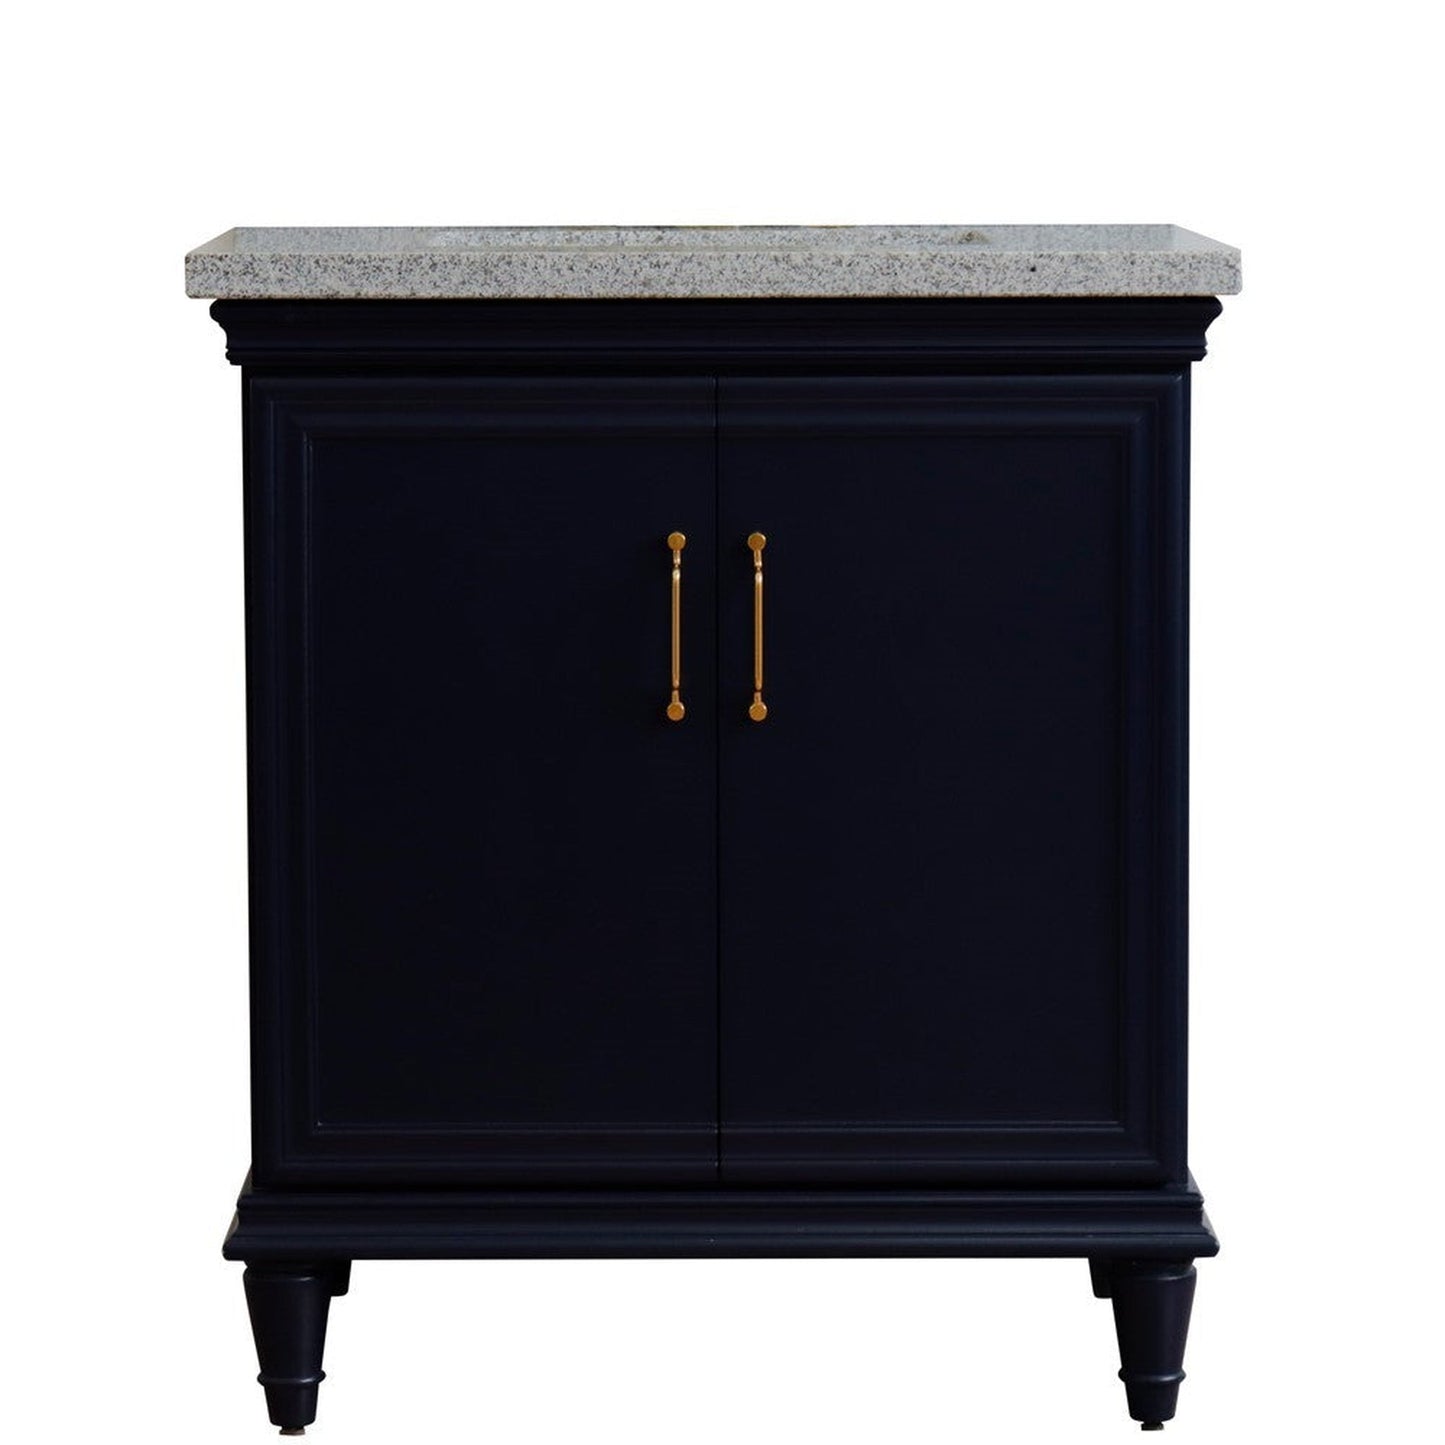 Bellaterra Home Forli 31" 2-Door 1-Drawer Blue Freestanding Vanity Set With Ceramic Undermount Rectangular Sink And Gray Granite Top